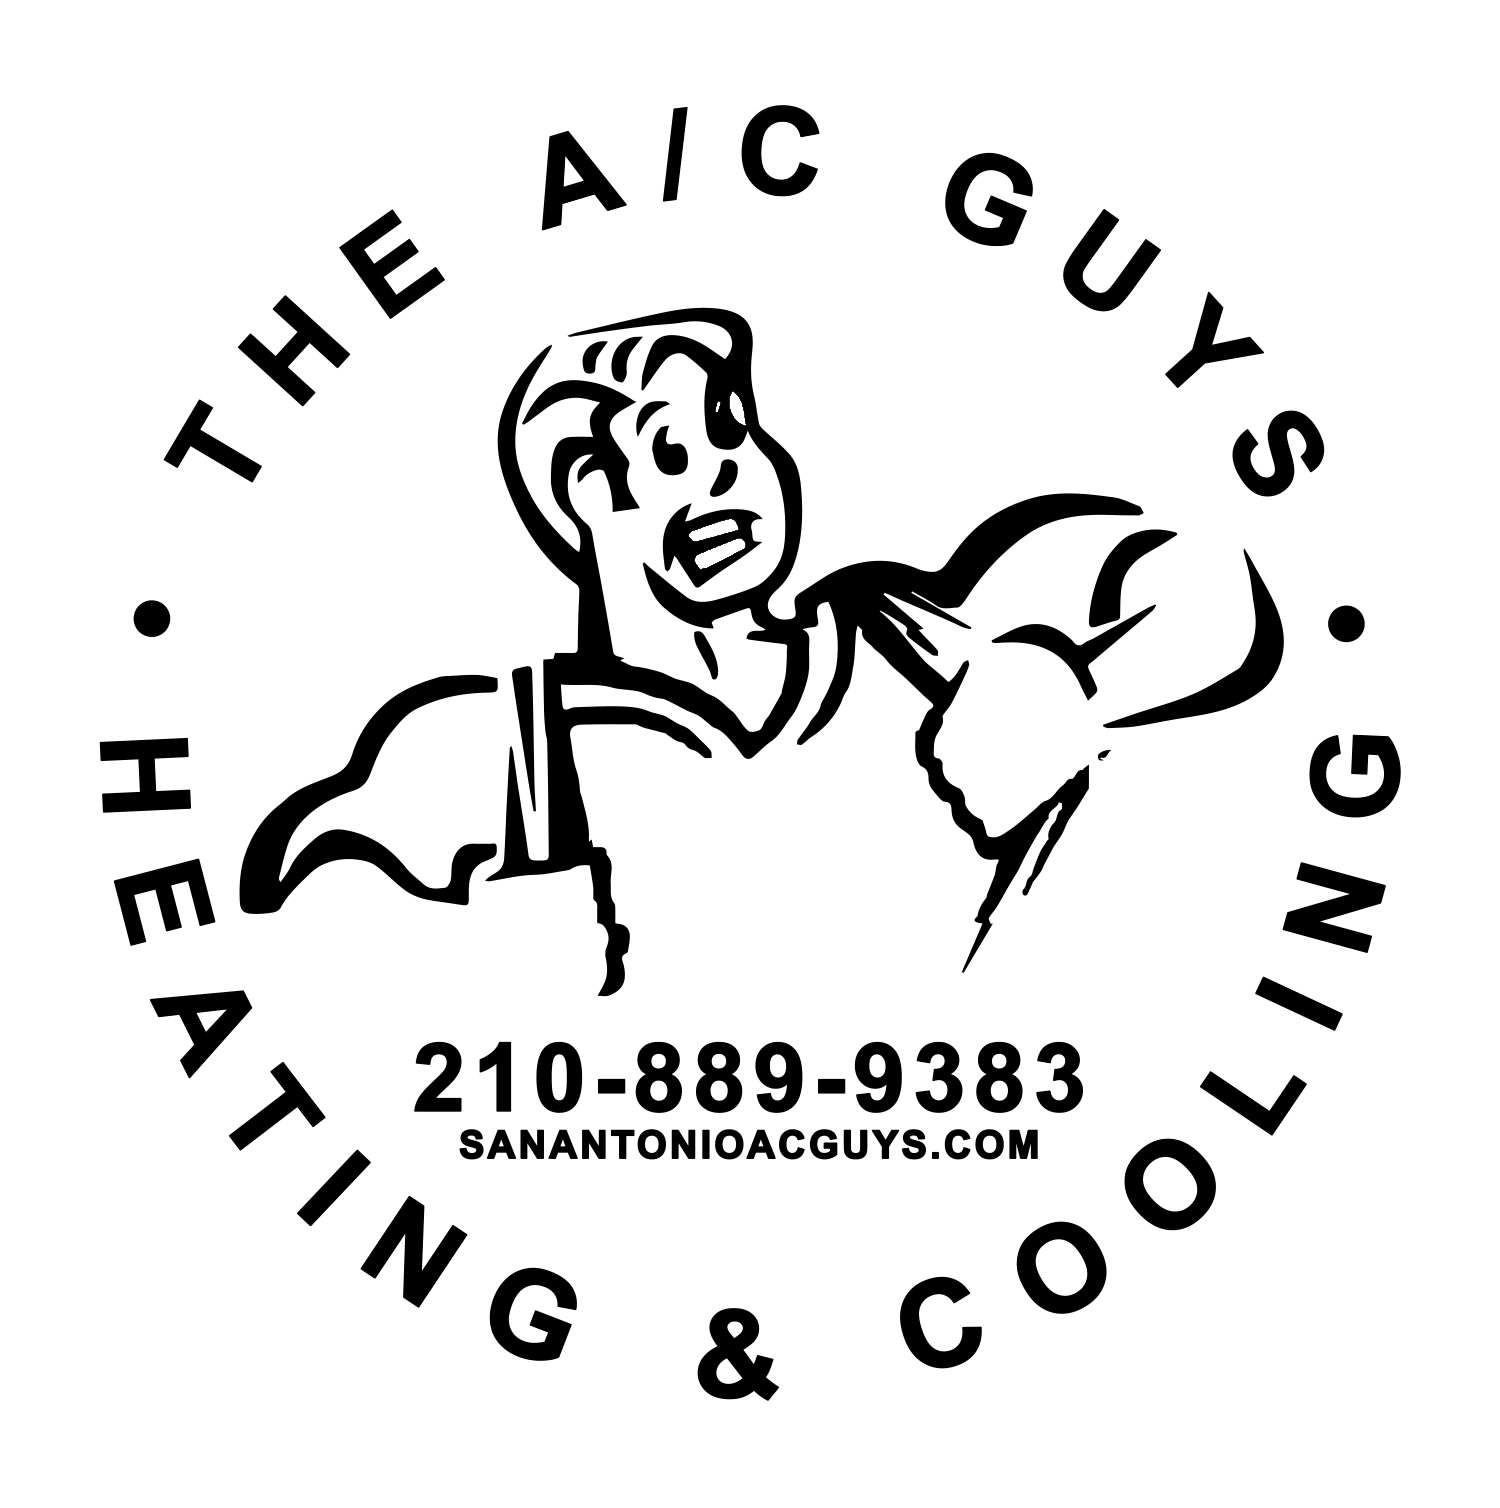 The A/C Guys Logo